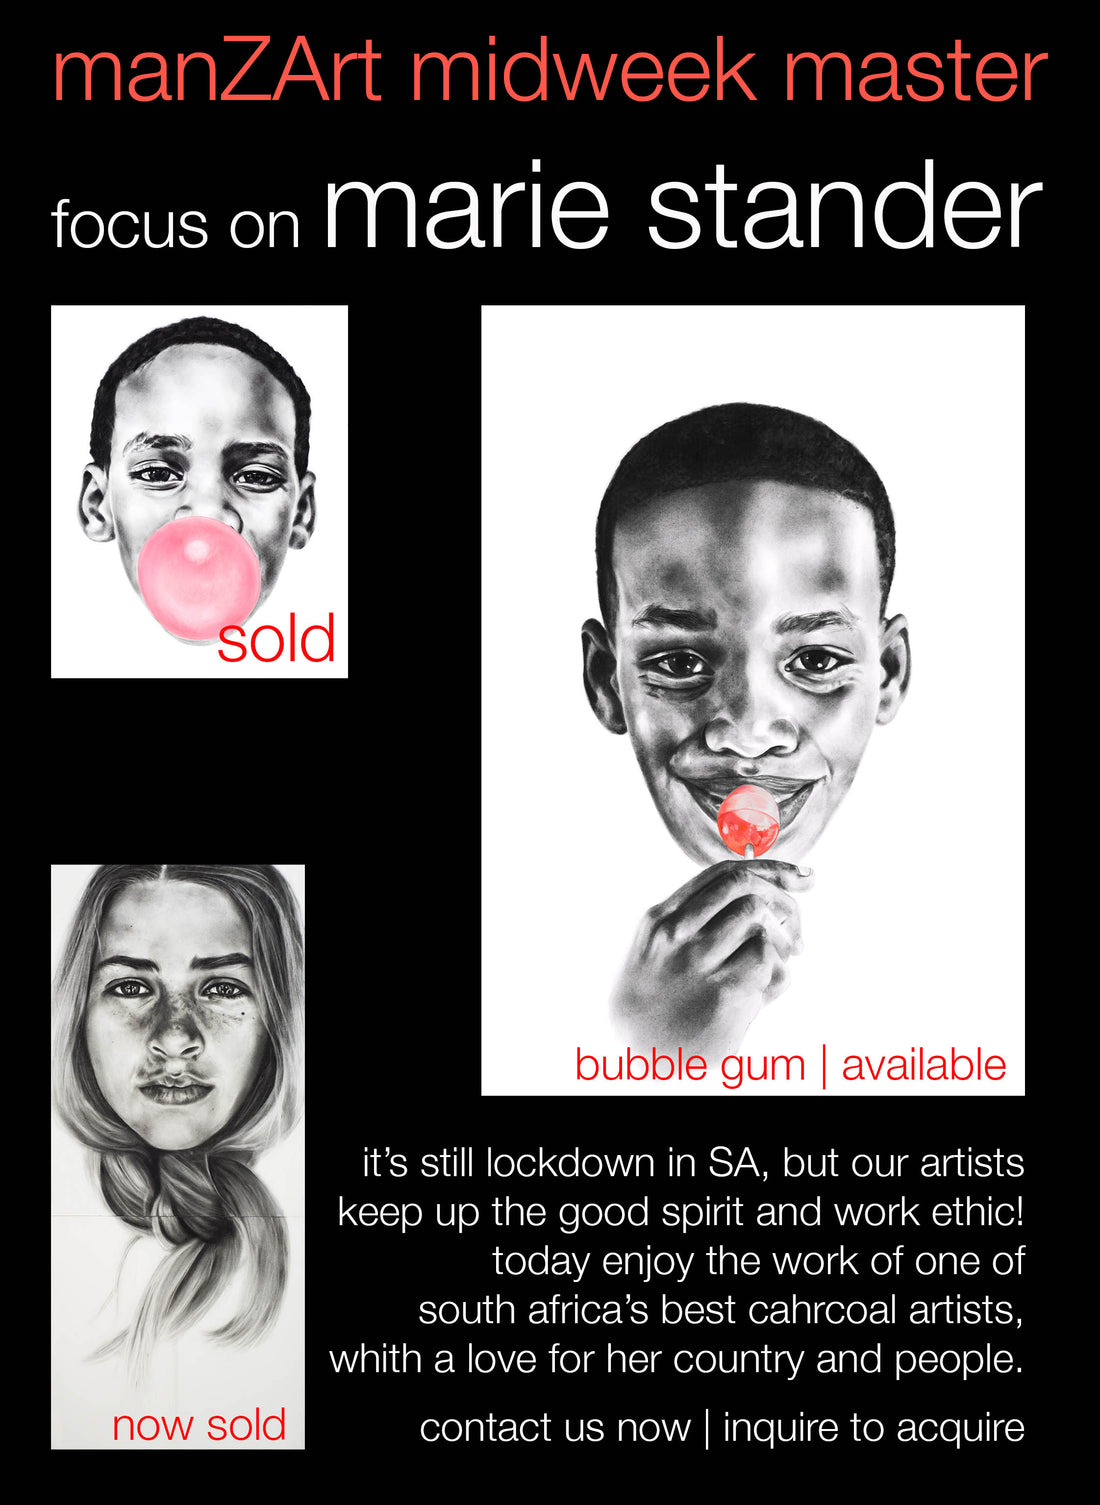 manZArt midweek master - focus on marie stander